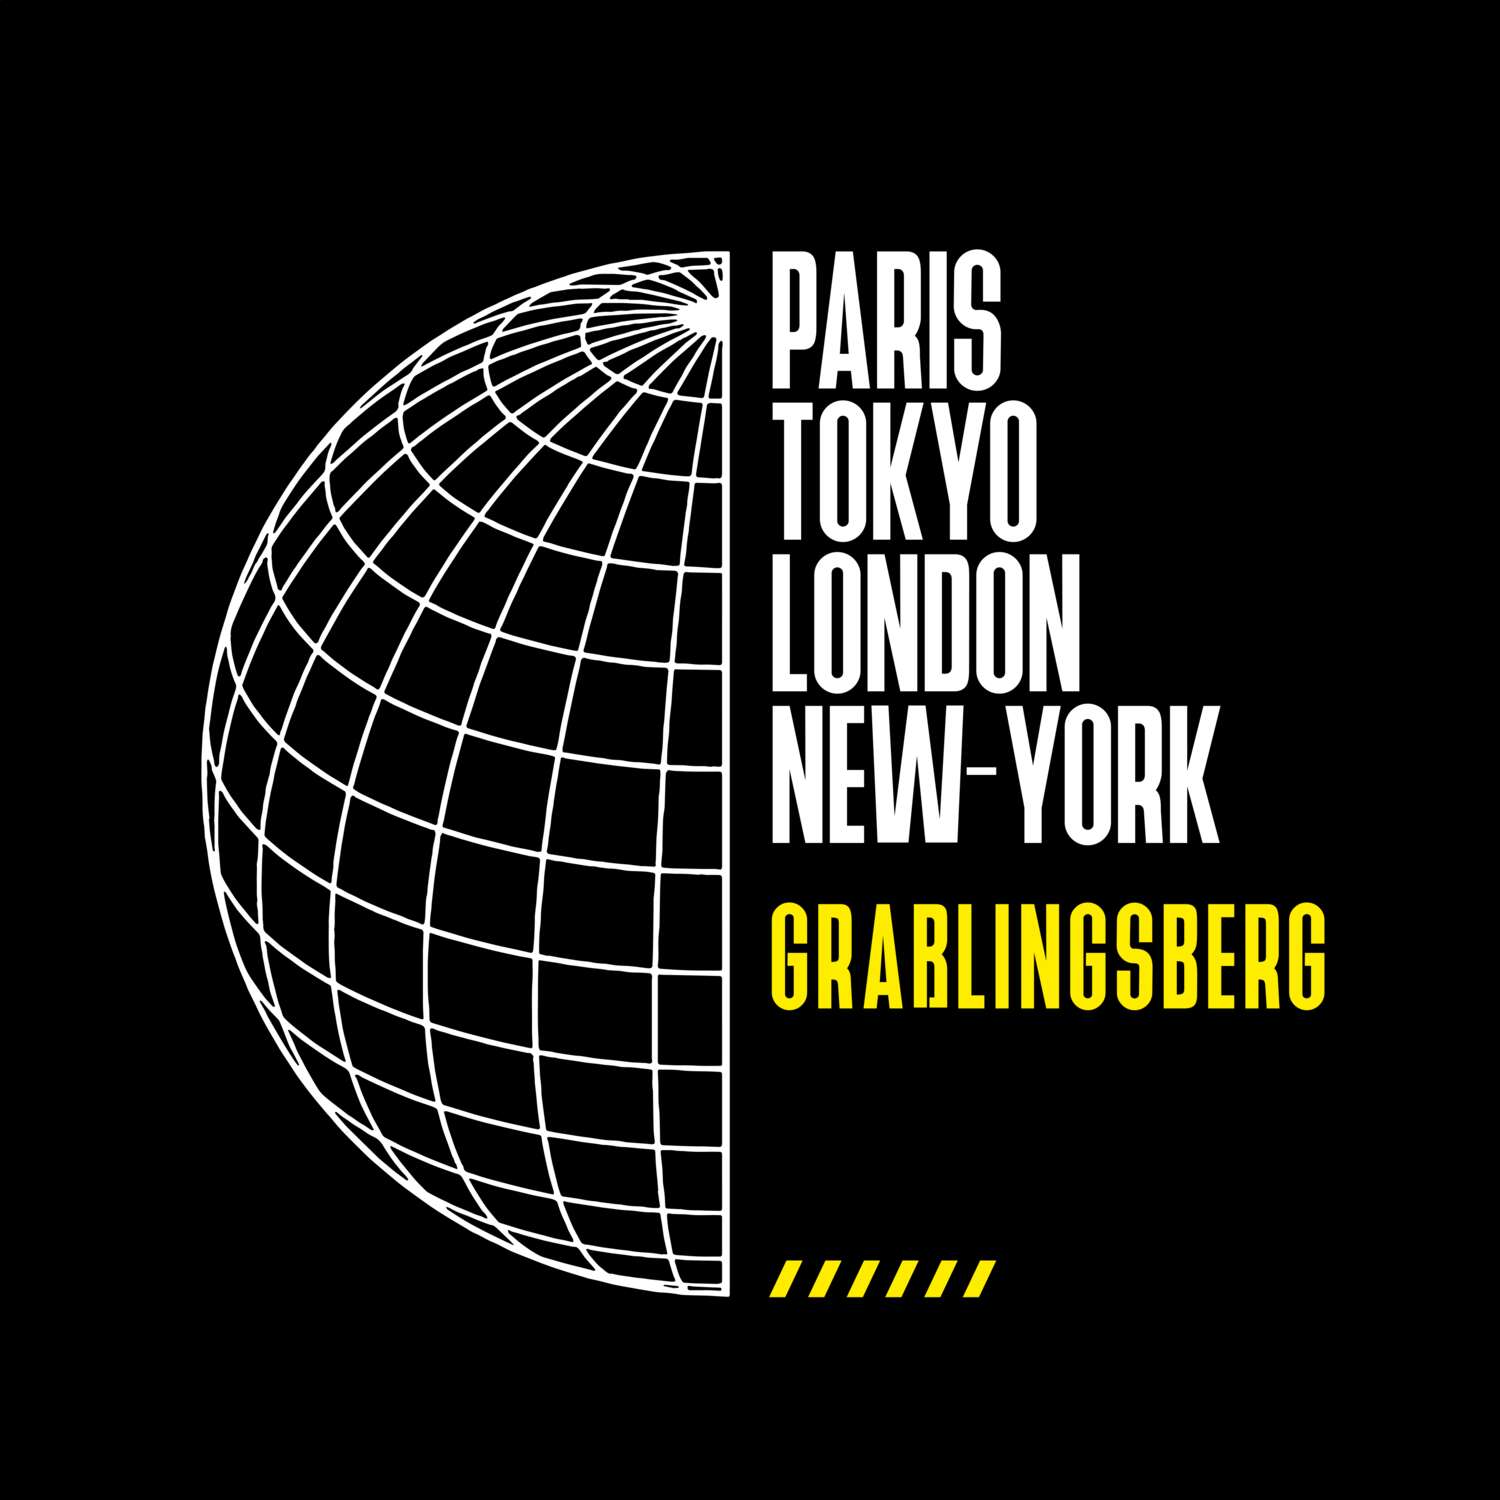 Graßlingsberg T-Shirt »Paris Tokyo London«